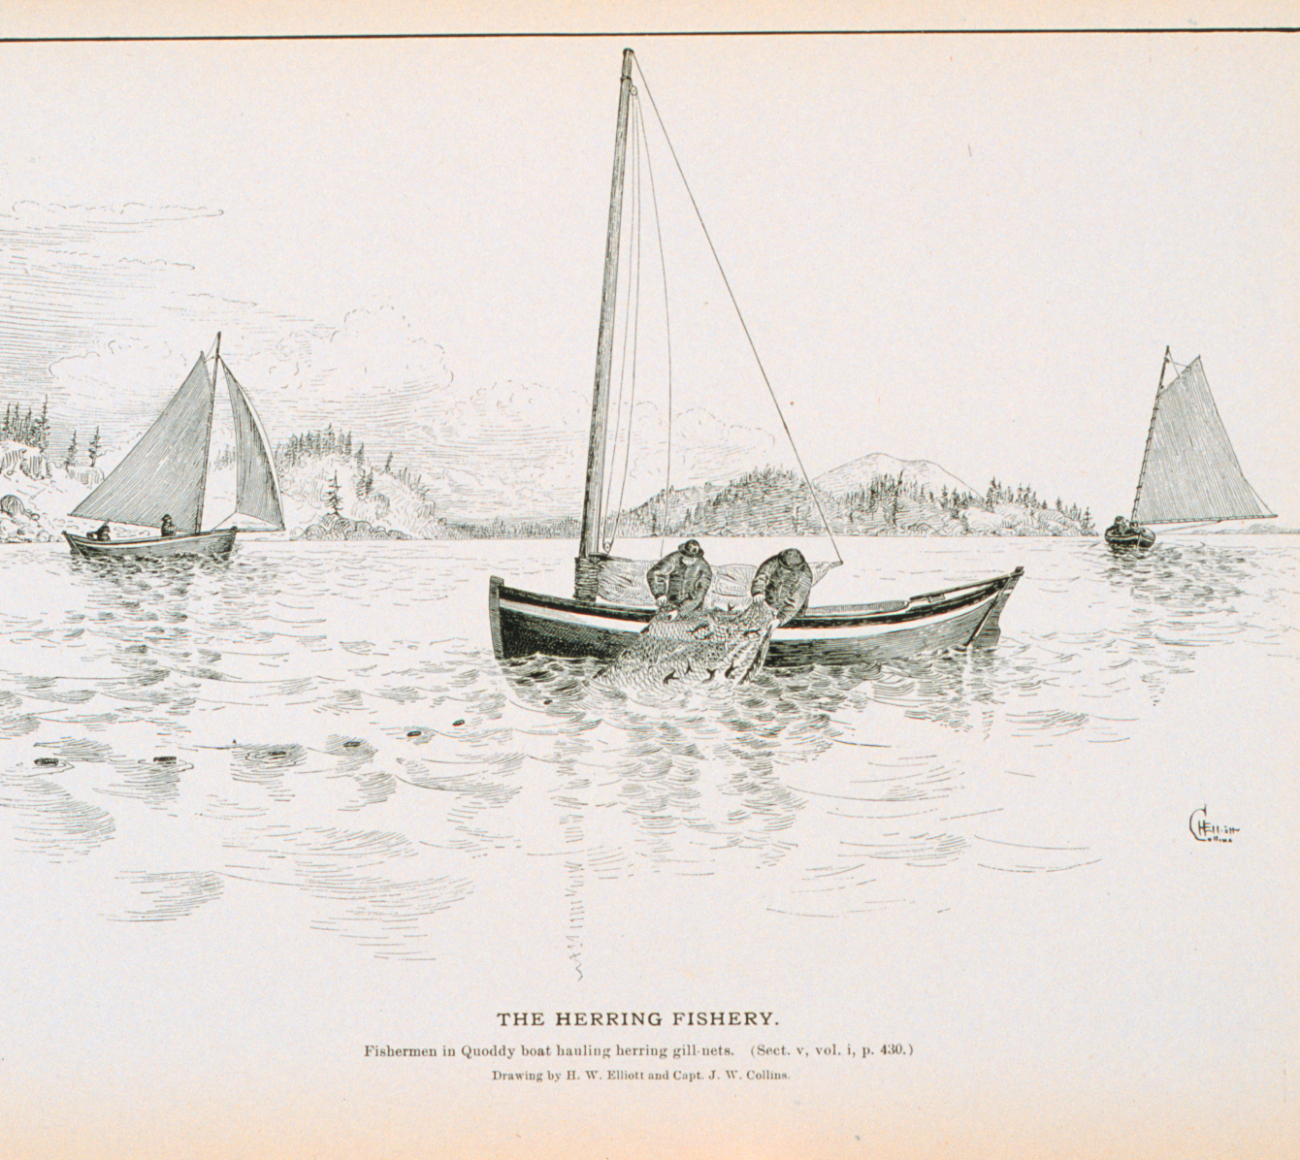 Fishermen in quoddy boat hauling herring gill-netsDrawing by H